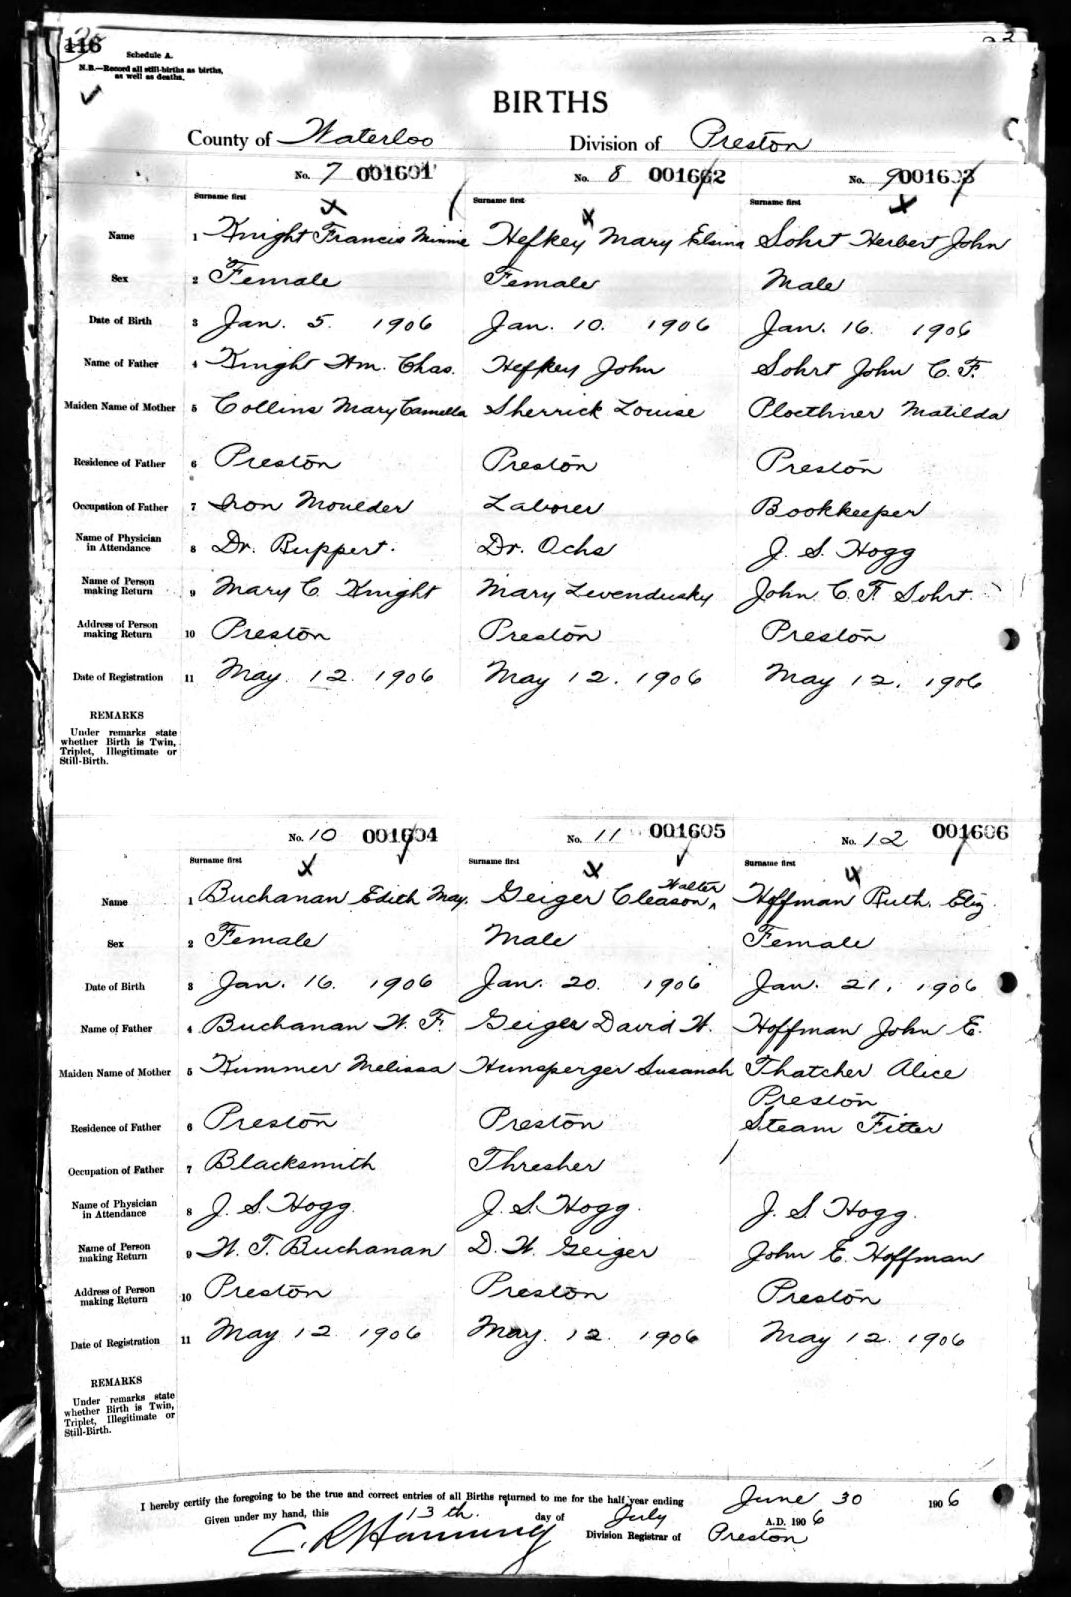 Birth record of Herbert John Sohrt